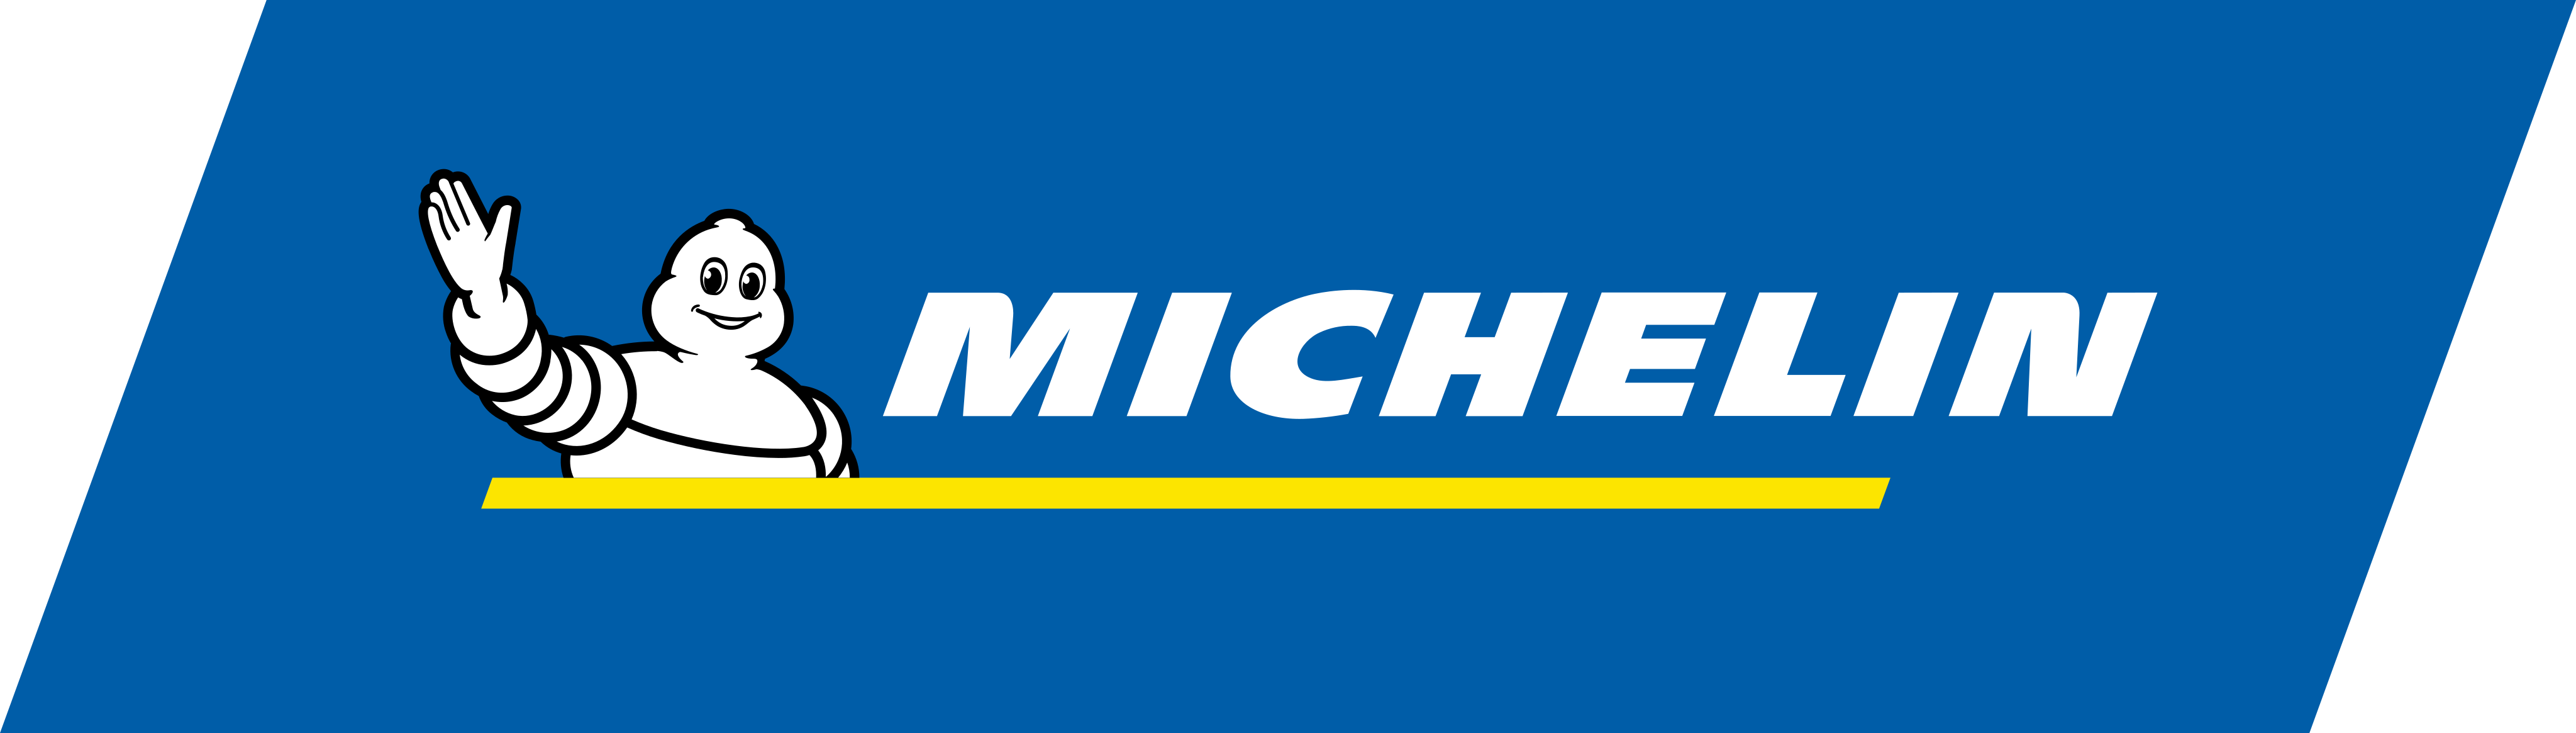 michelin-logo-6